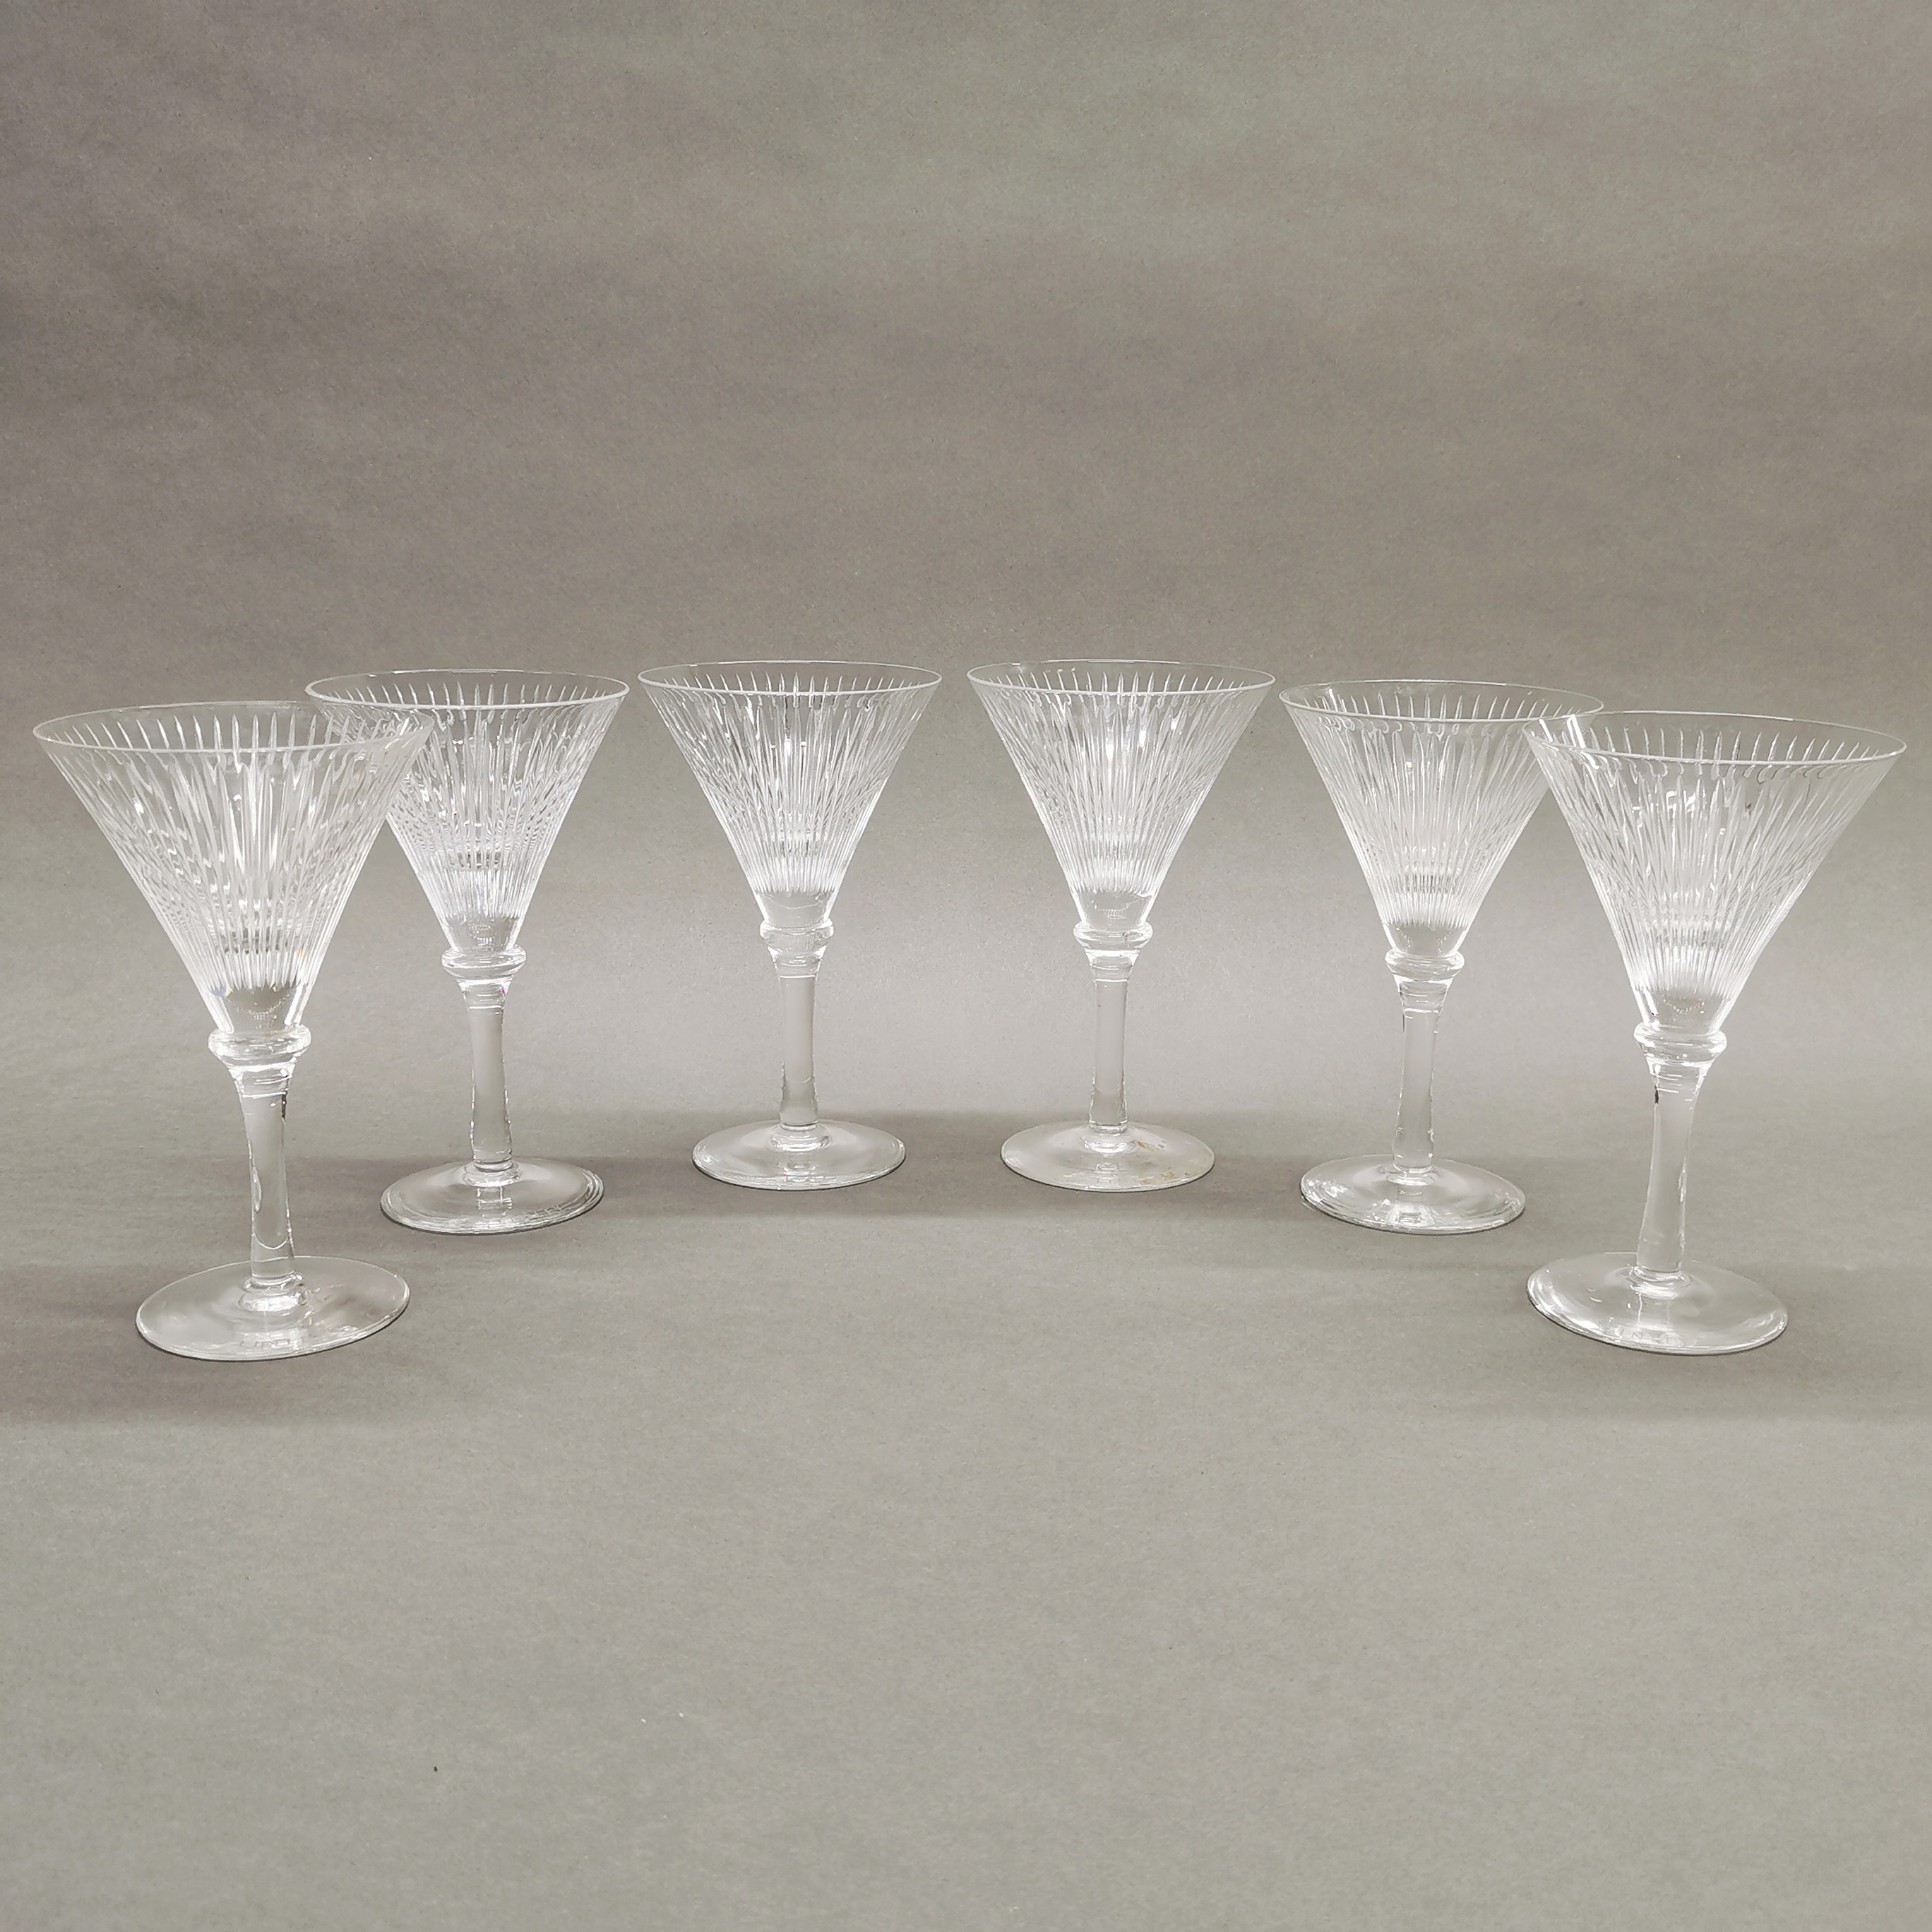 A set of six David Linley cut crystal cocktail glasses, H. 19cm. N/B no visible damage. - Image 5 of 5